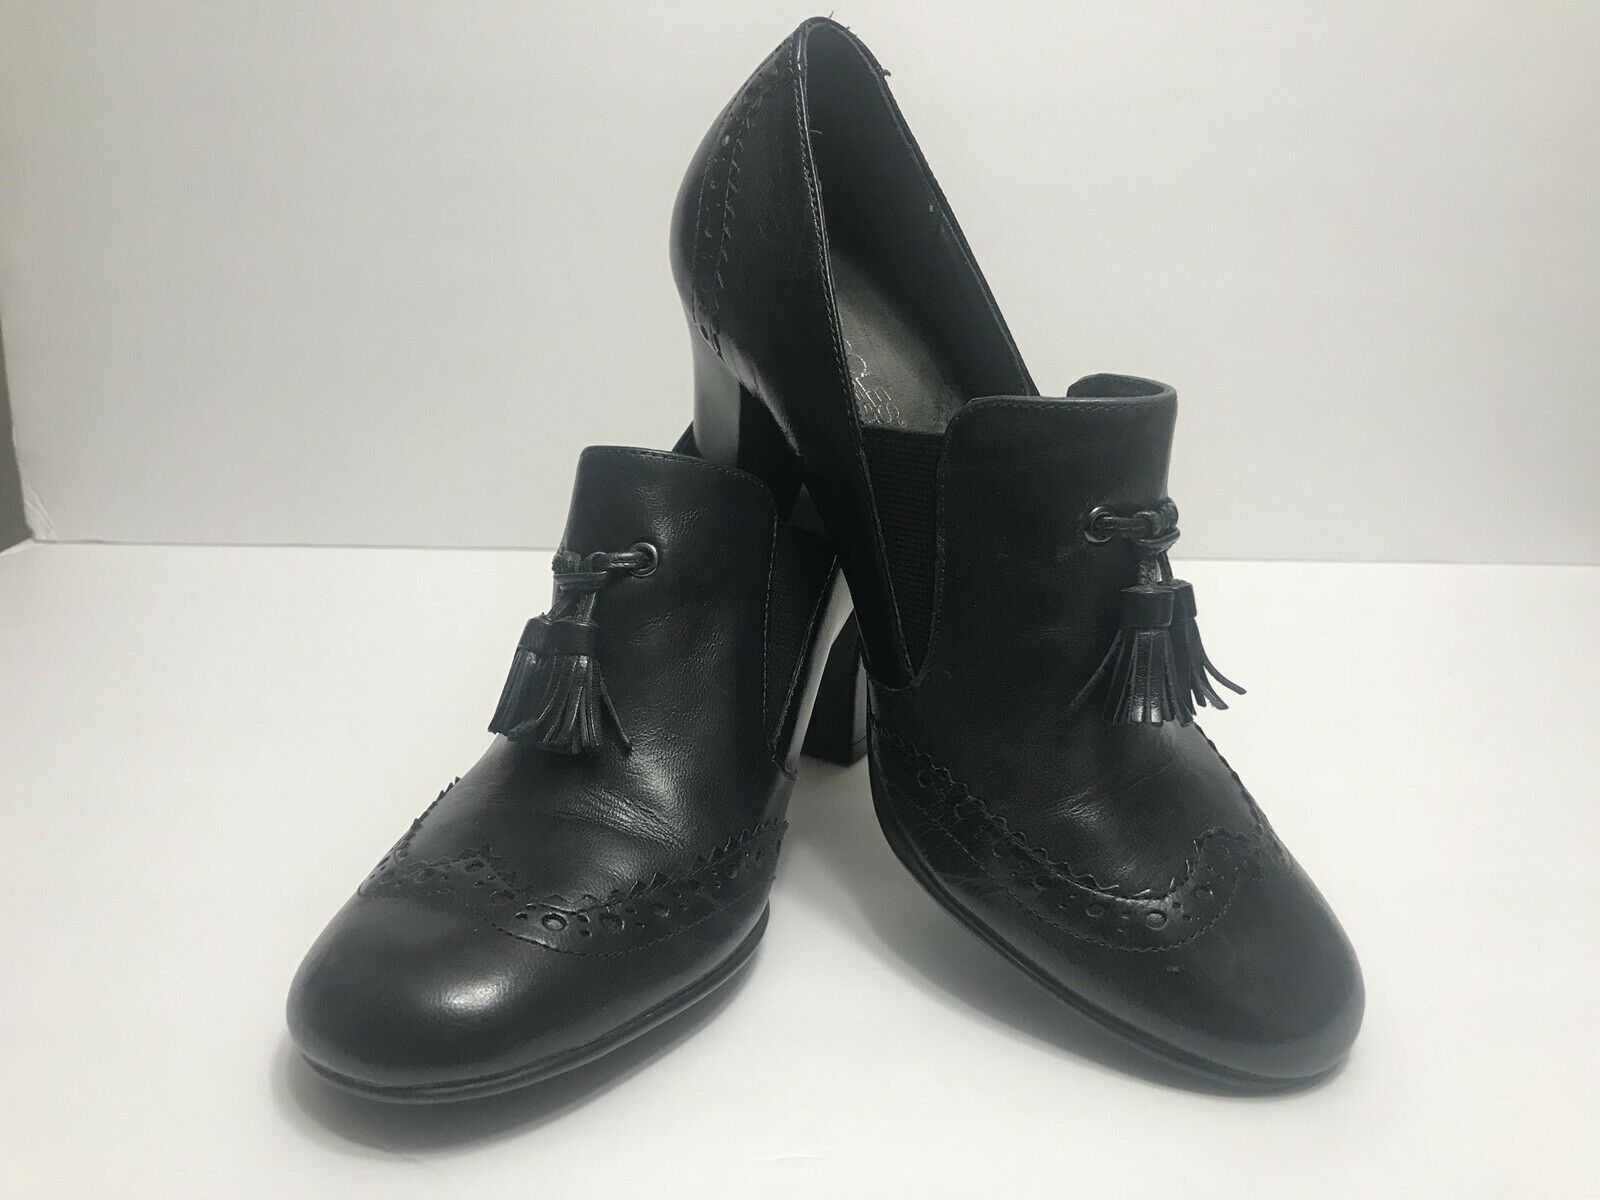 AEROSOLES HEELREST 3” heel shoes, Black and Dark Gray. Size: 8